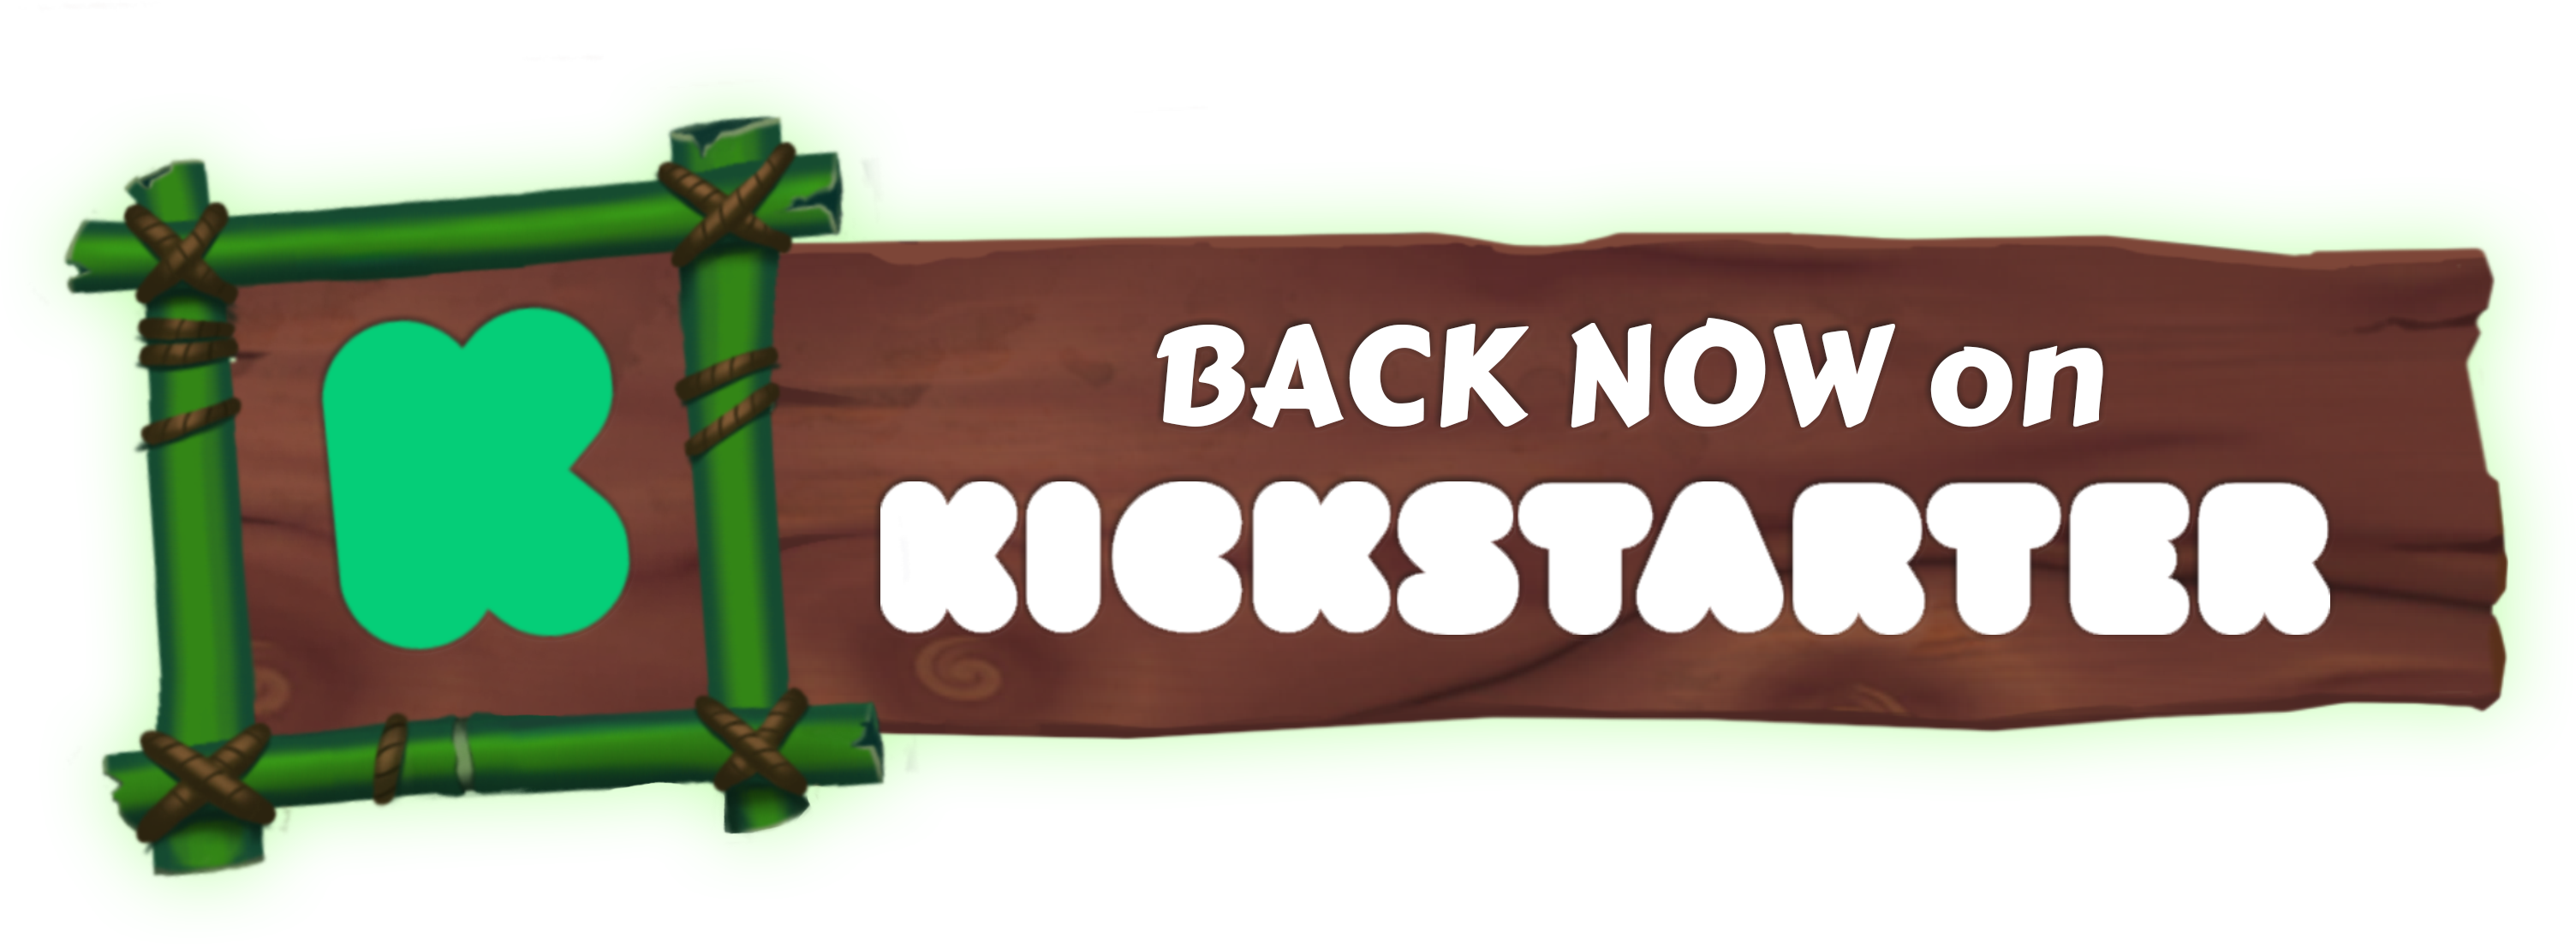 Epifrog is coming to Kickstarter!